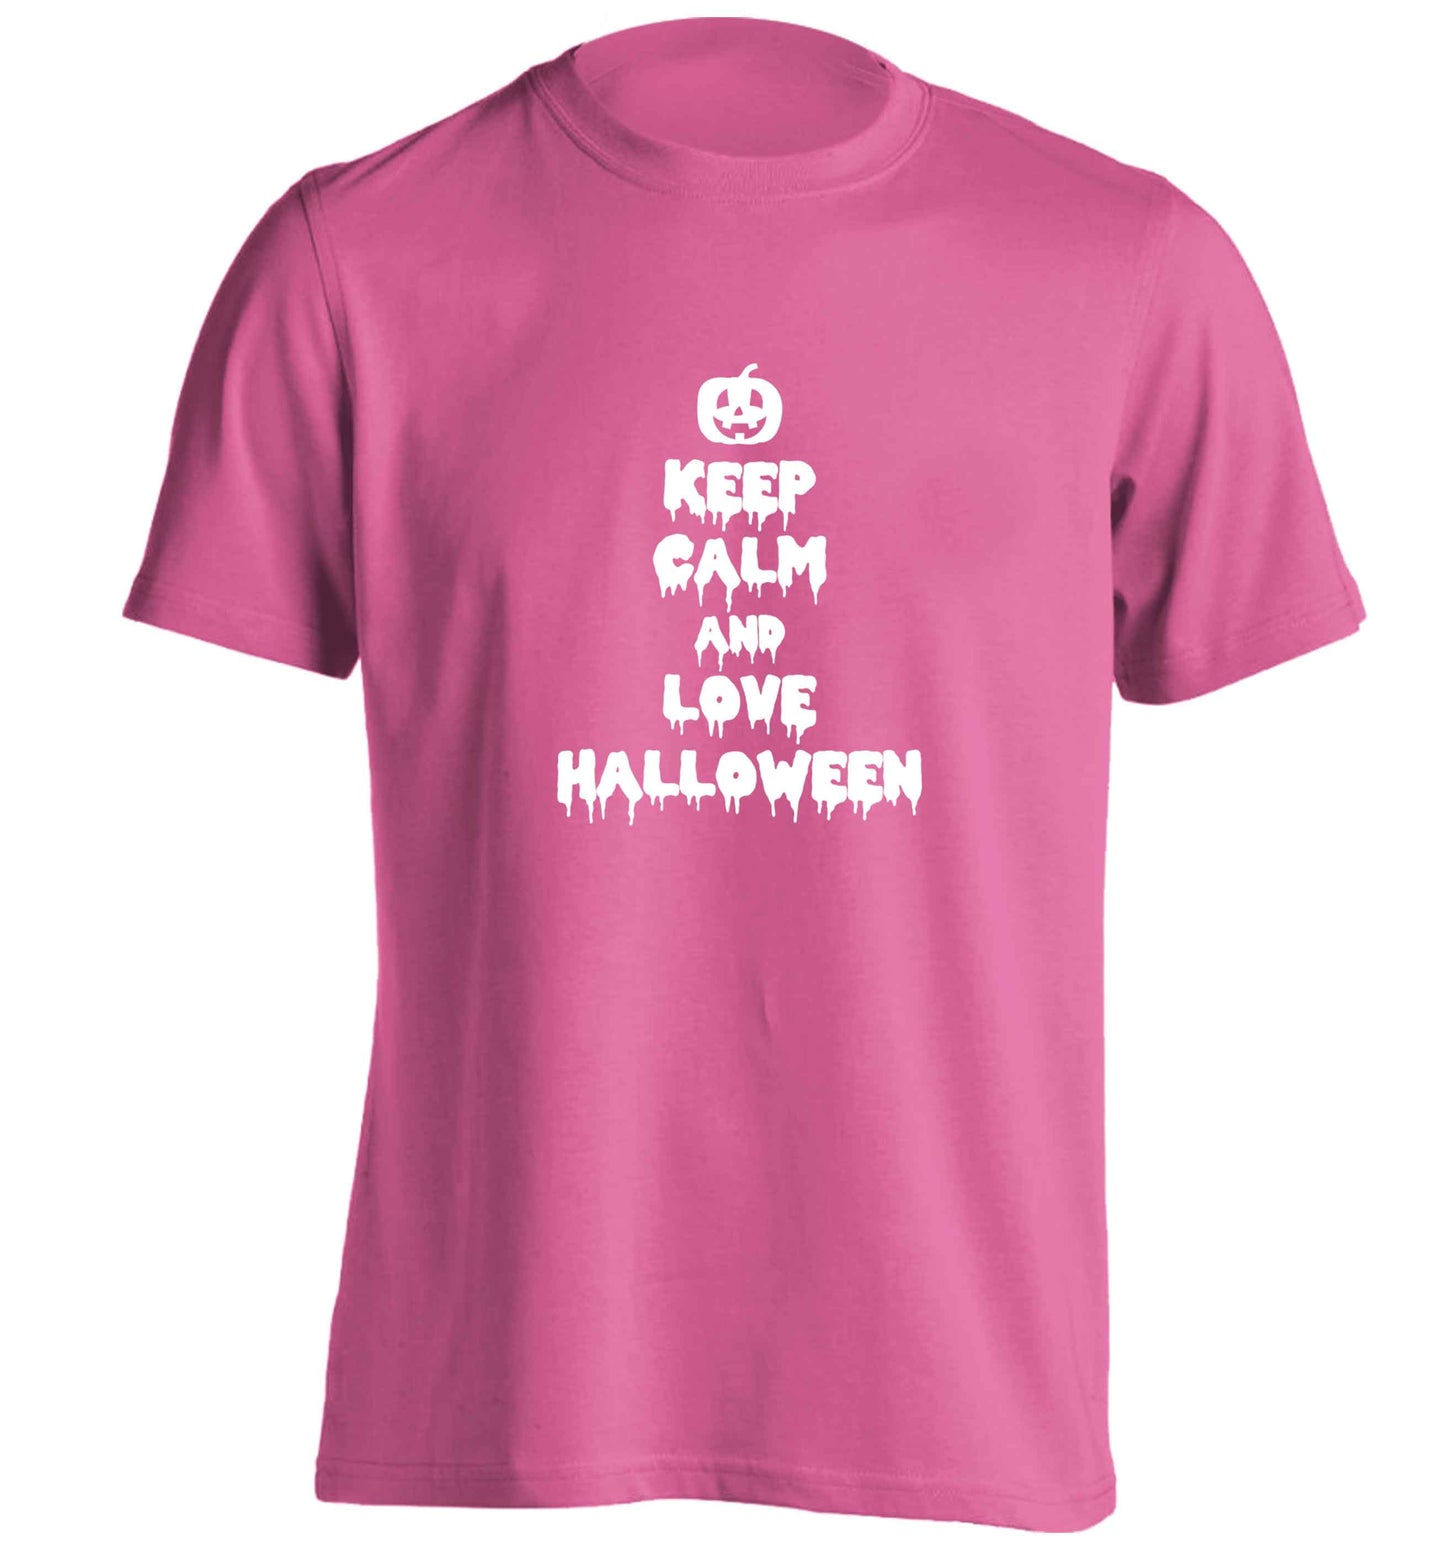 Keep calm and love halloween adults unisex pink Tshirt 2XL